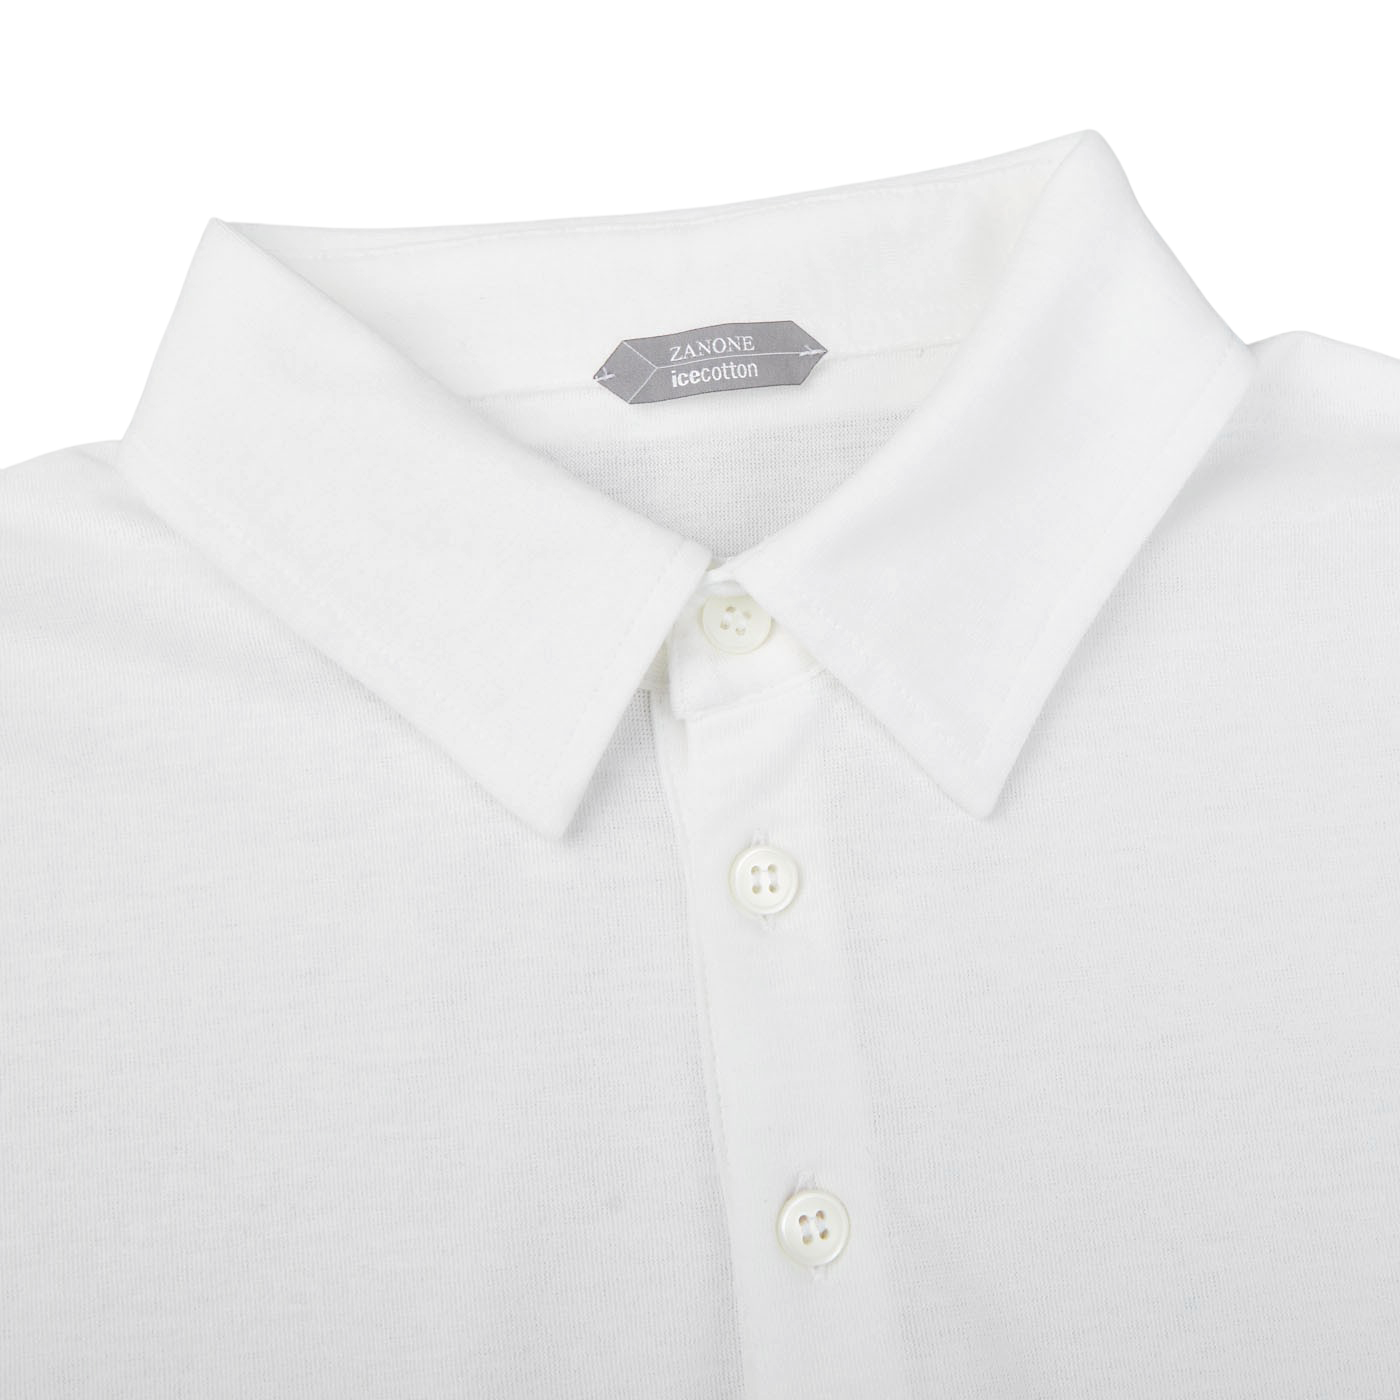 Zanone White Ice Cotton Polo Shirt Collar1